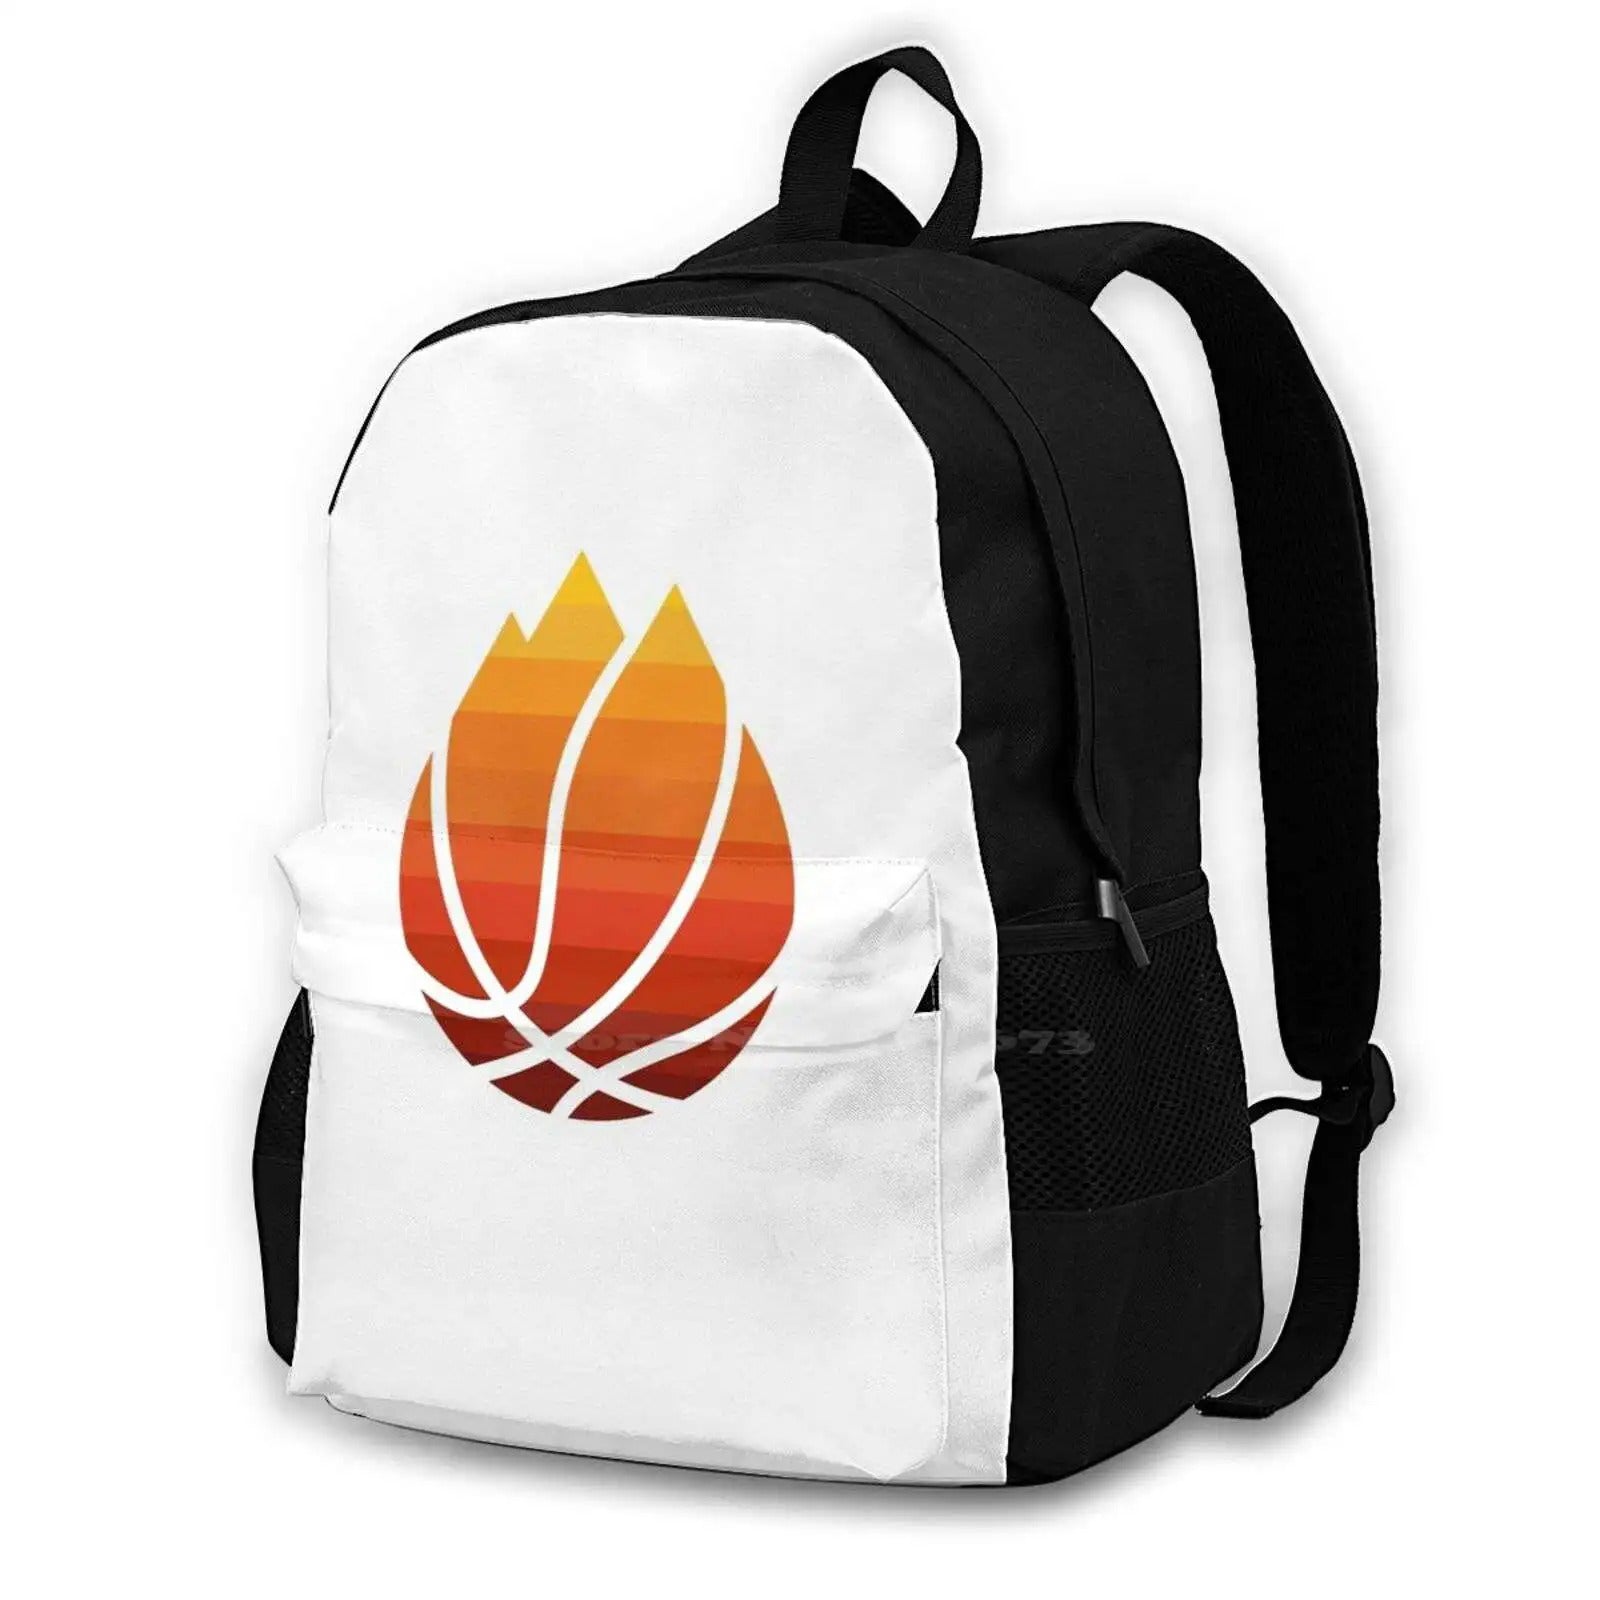 White Basketball Backpack - Backpack - Black